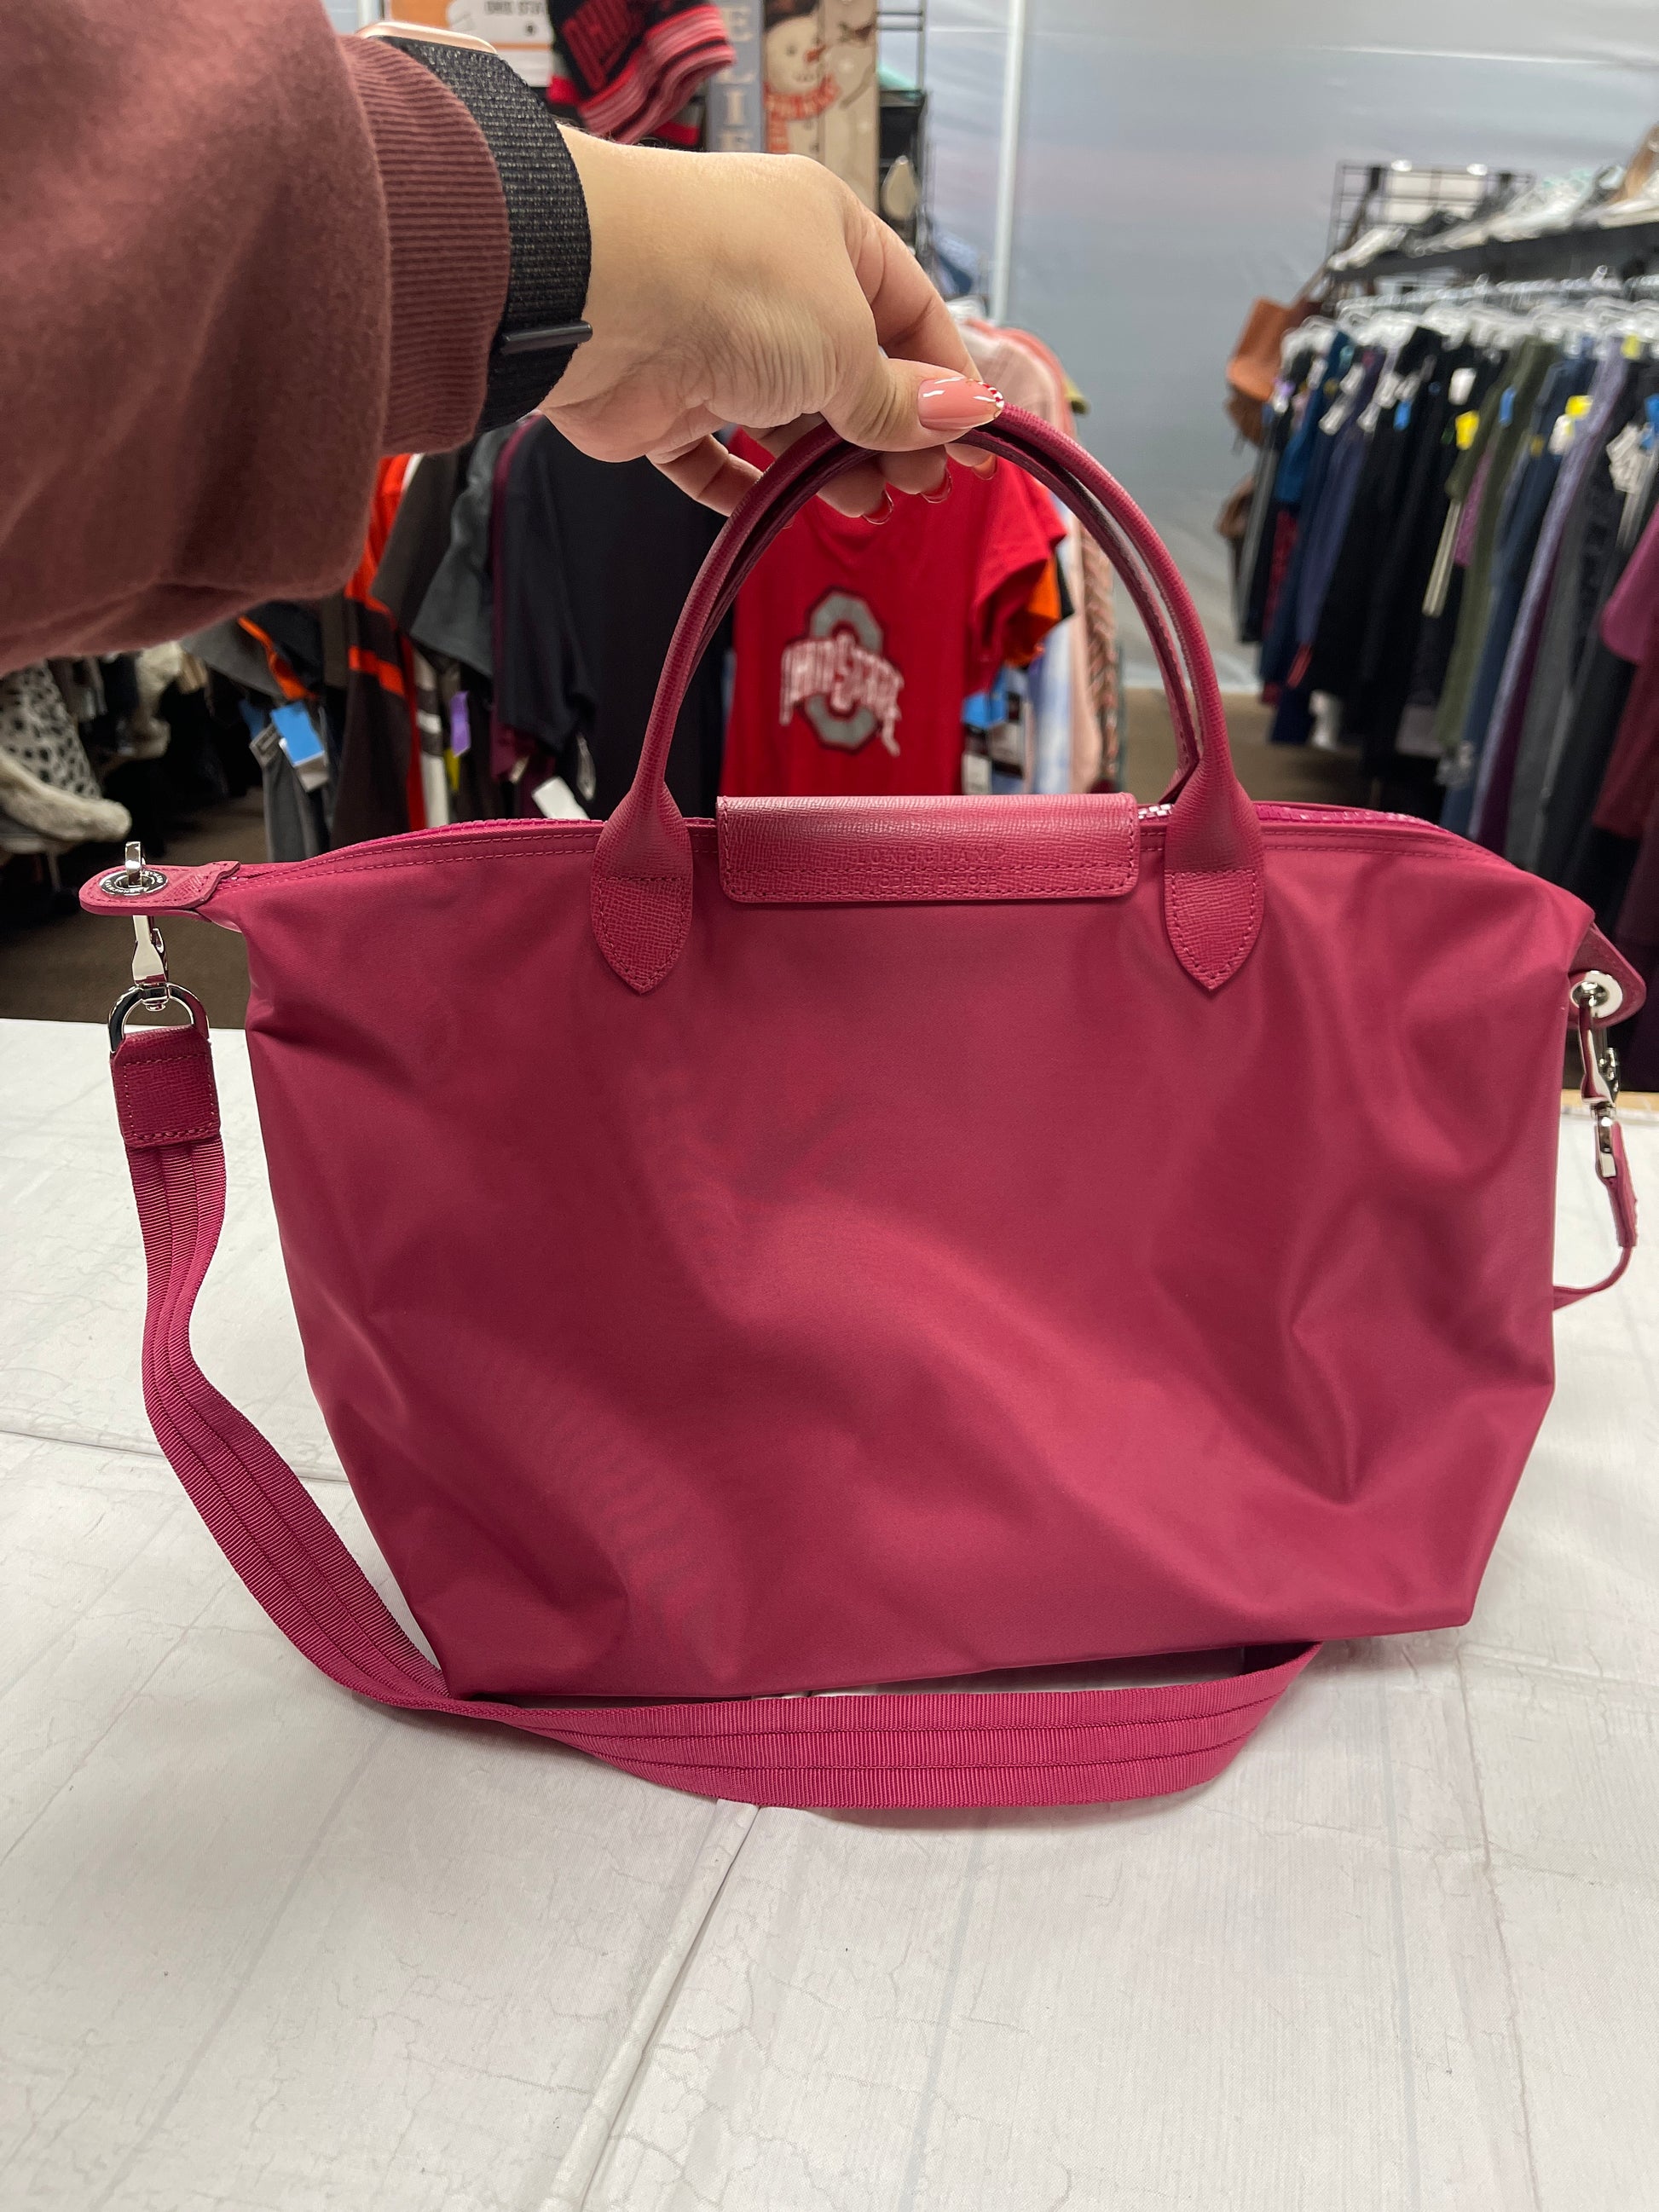 Handbag Designer By Longchamp Size: Medium